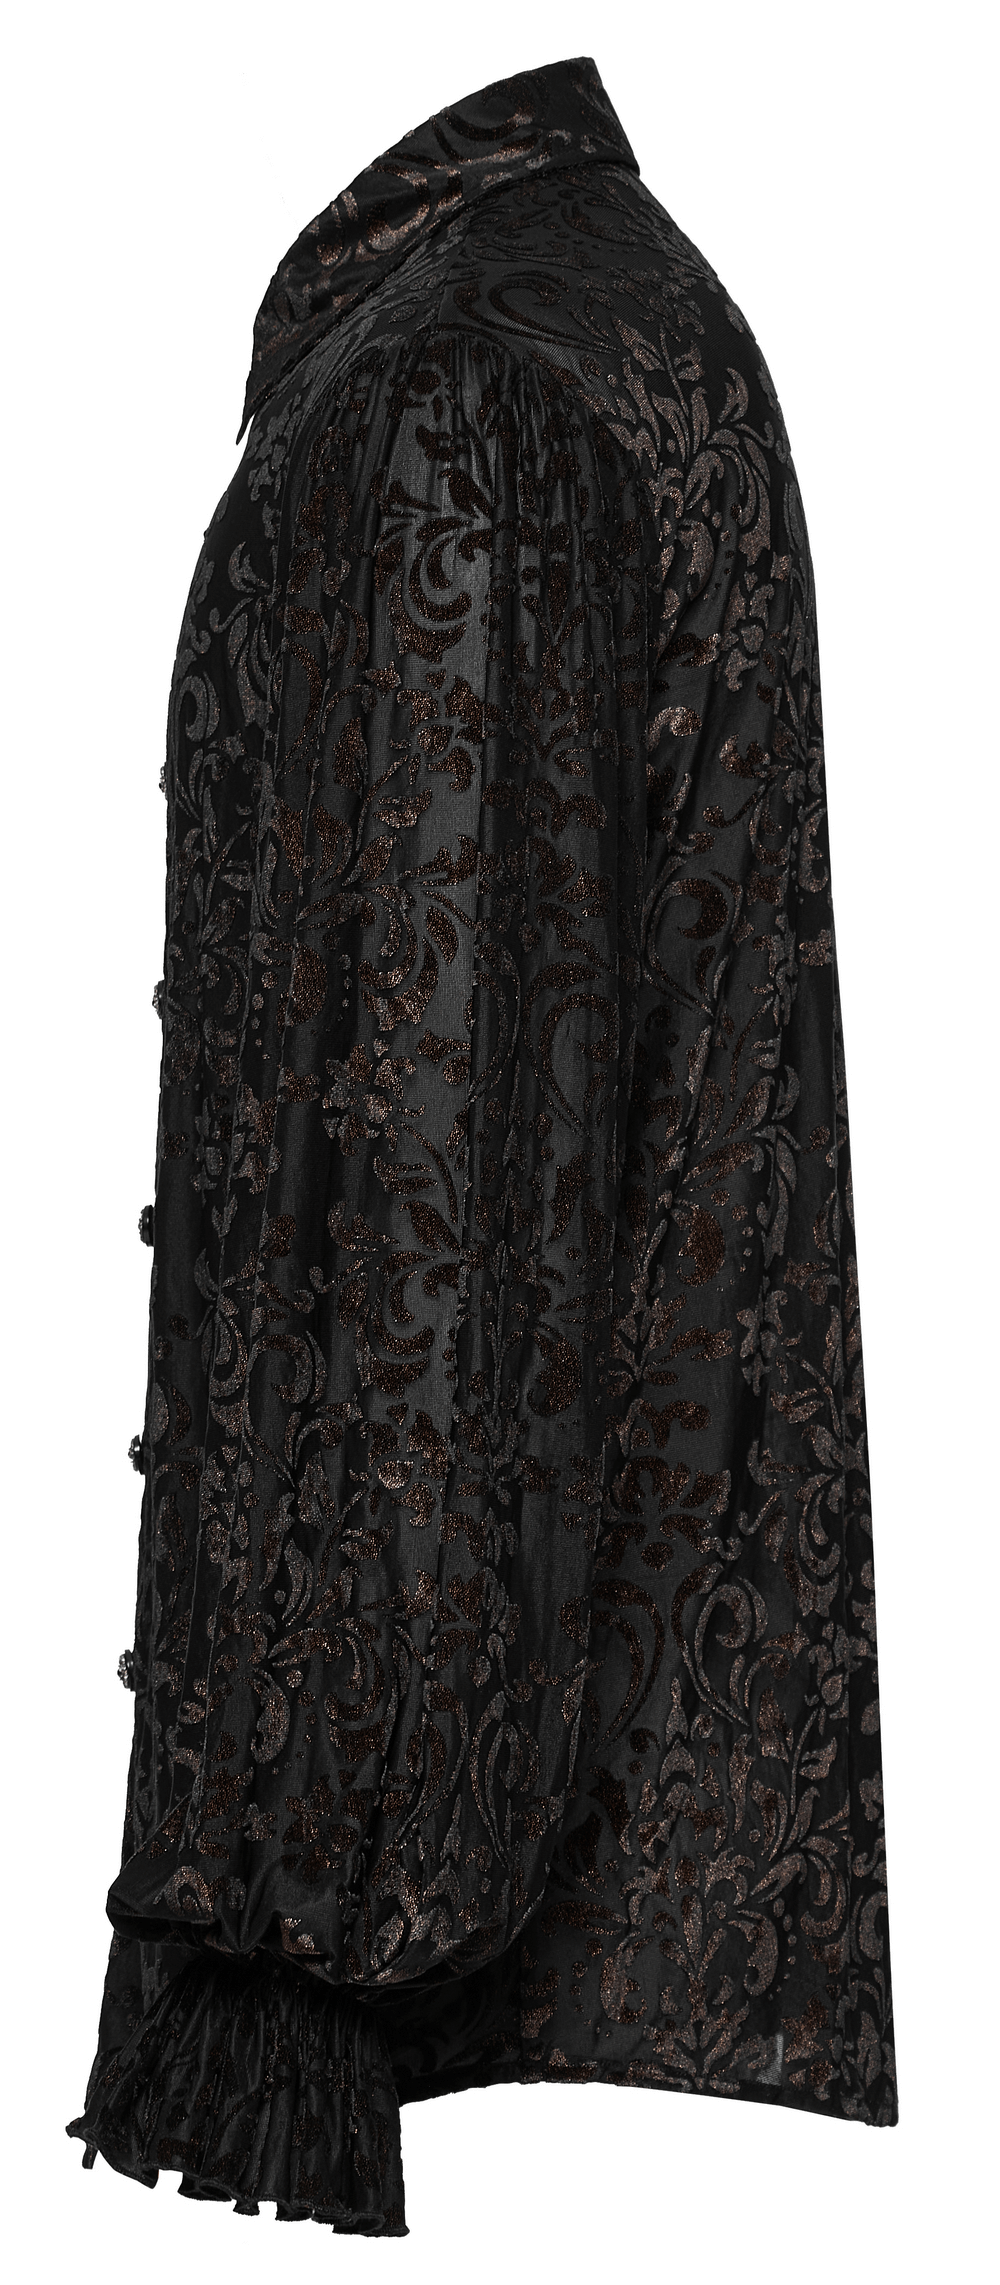 Victorian-Inspired Black Flocked Goth Shirt - HARD'N'HEAVY